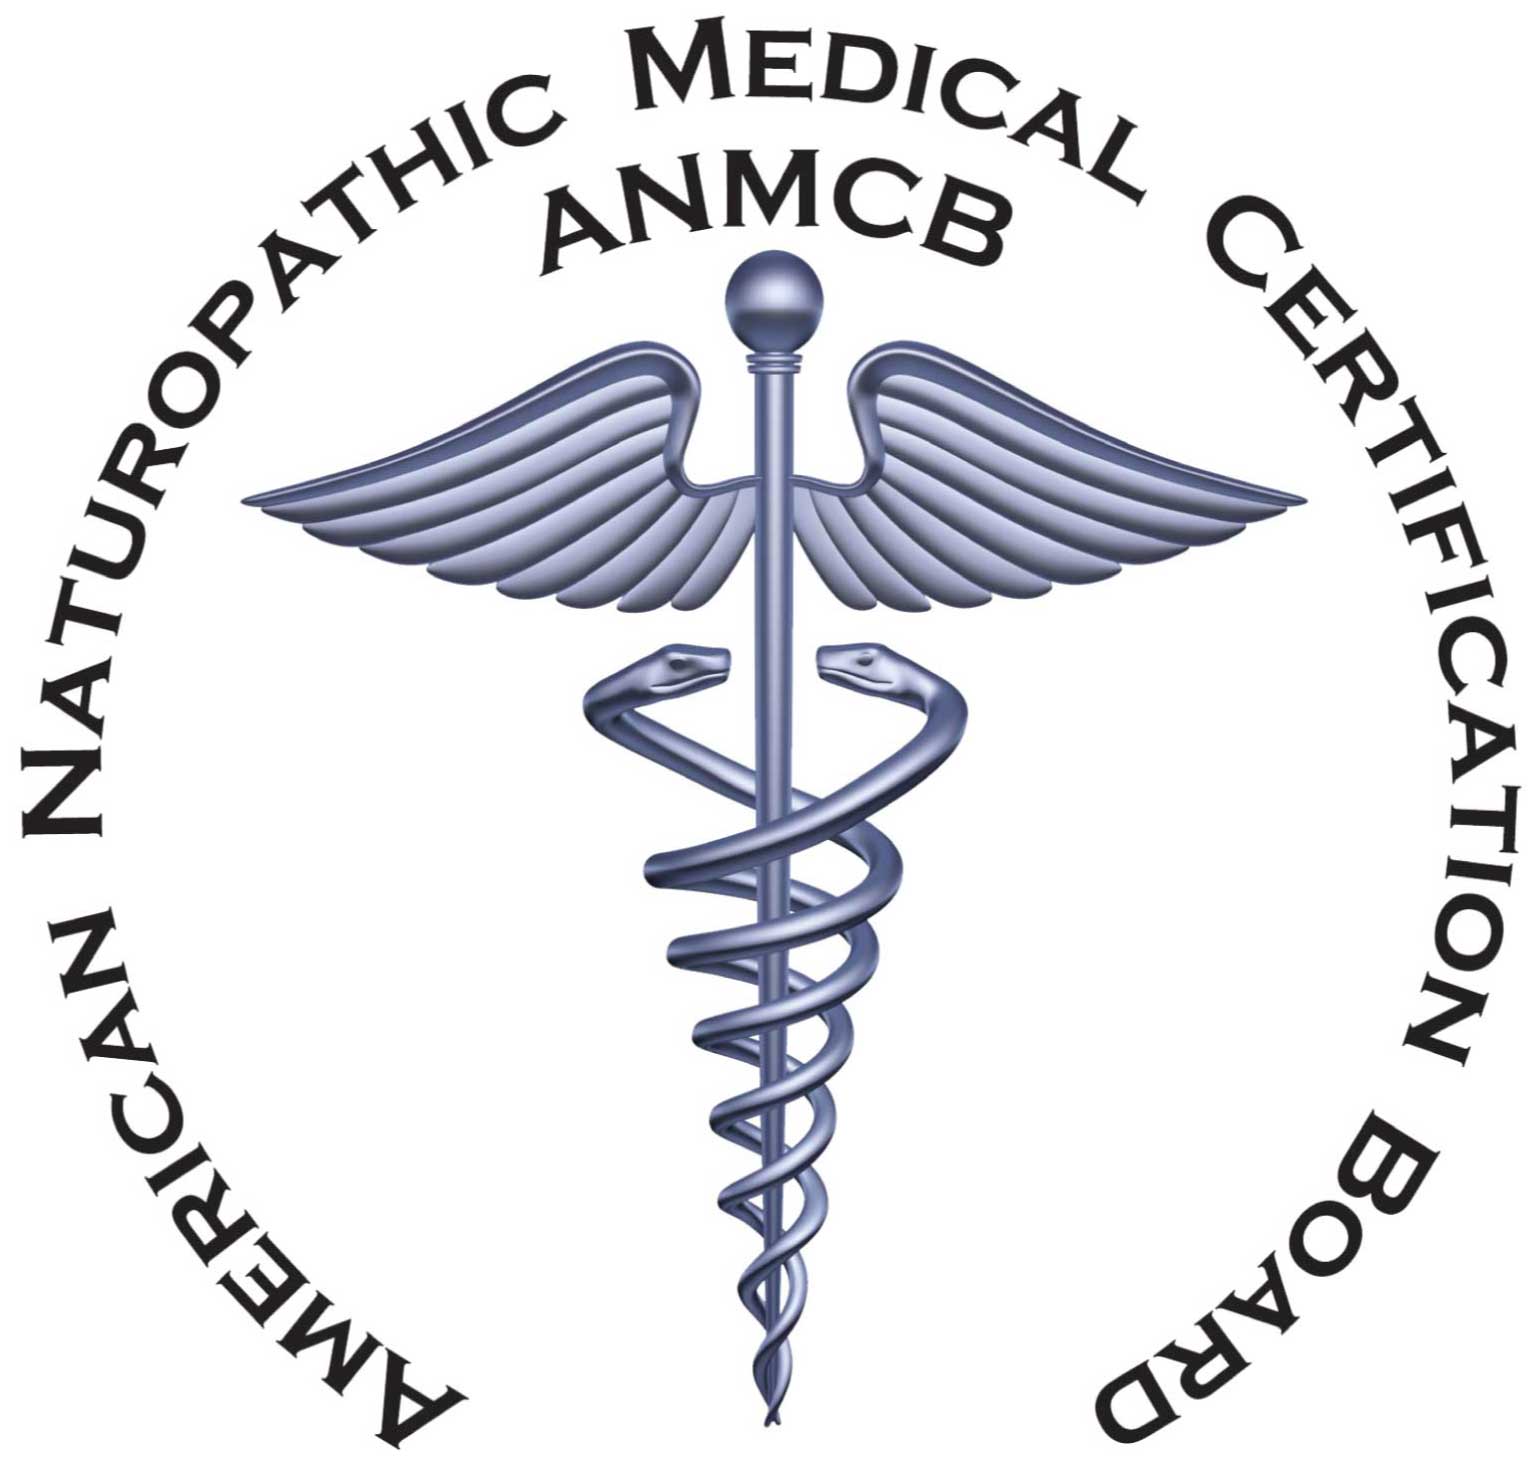 ANMCB logo